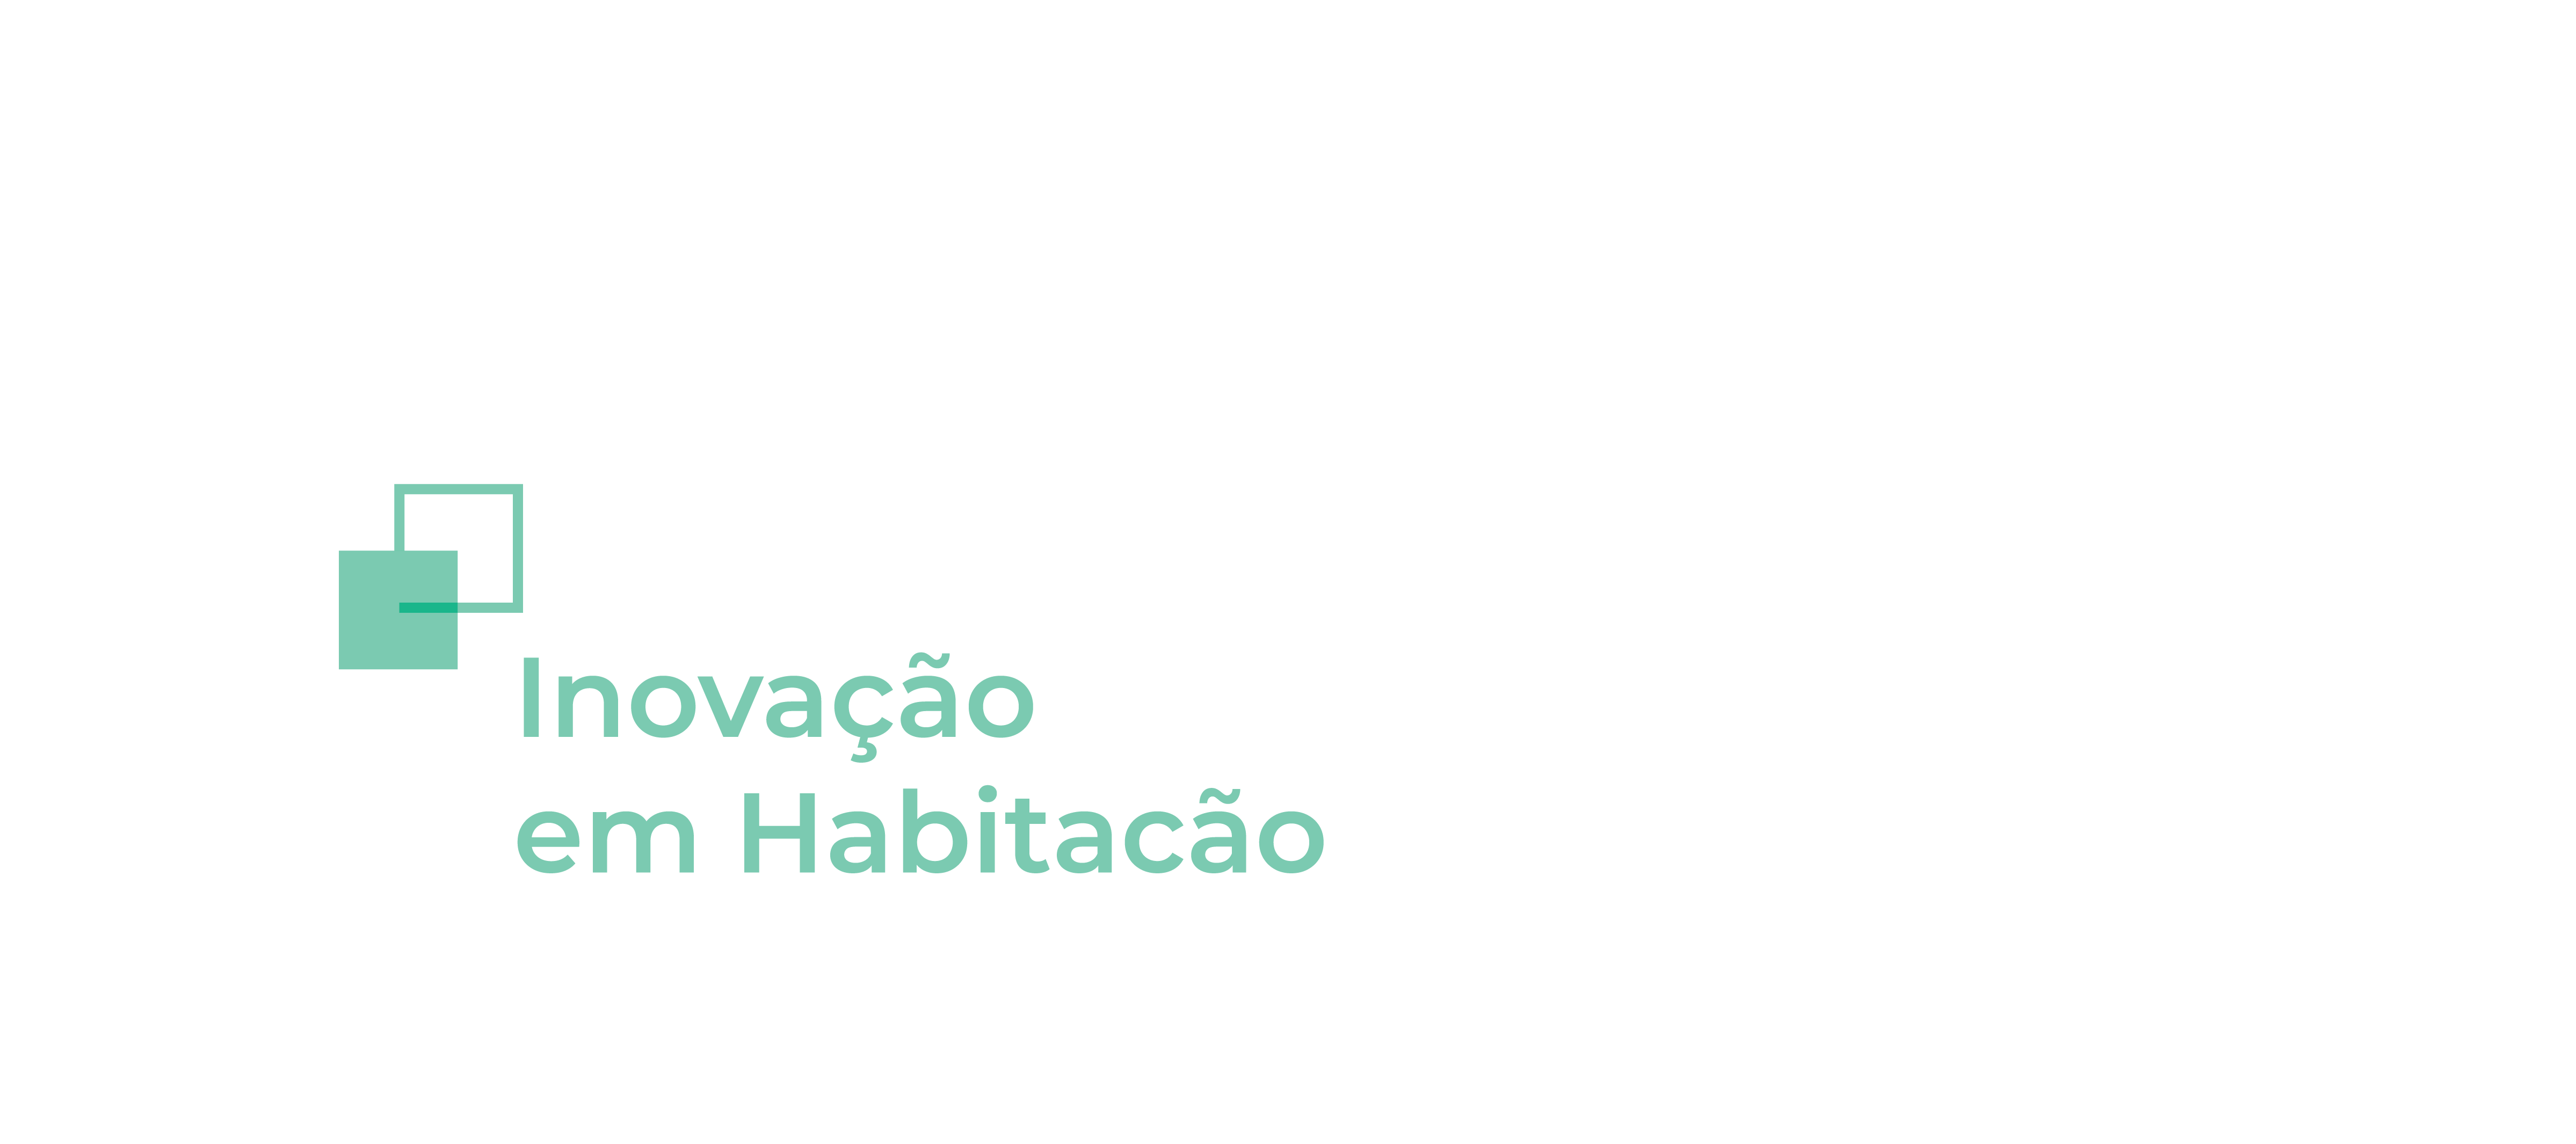 Logotipo Cursos Inovacao na habitacao